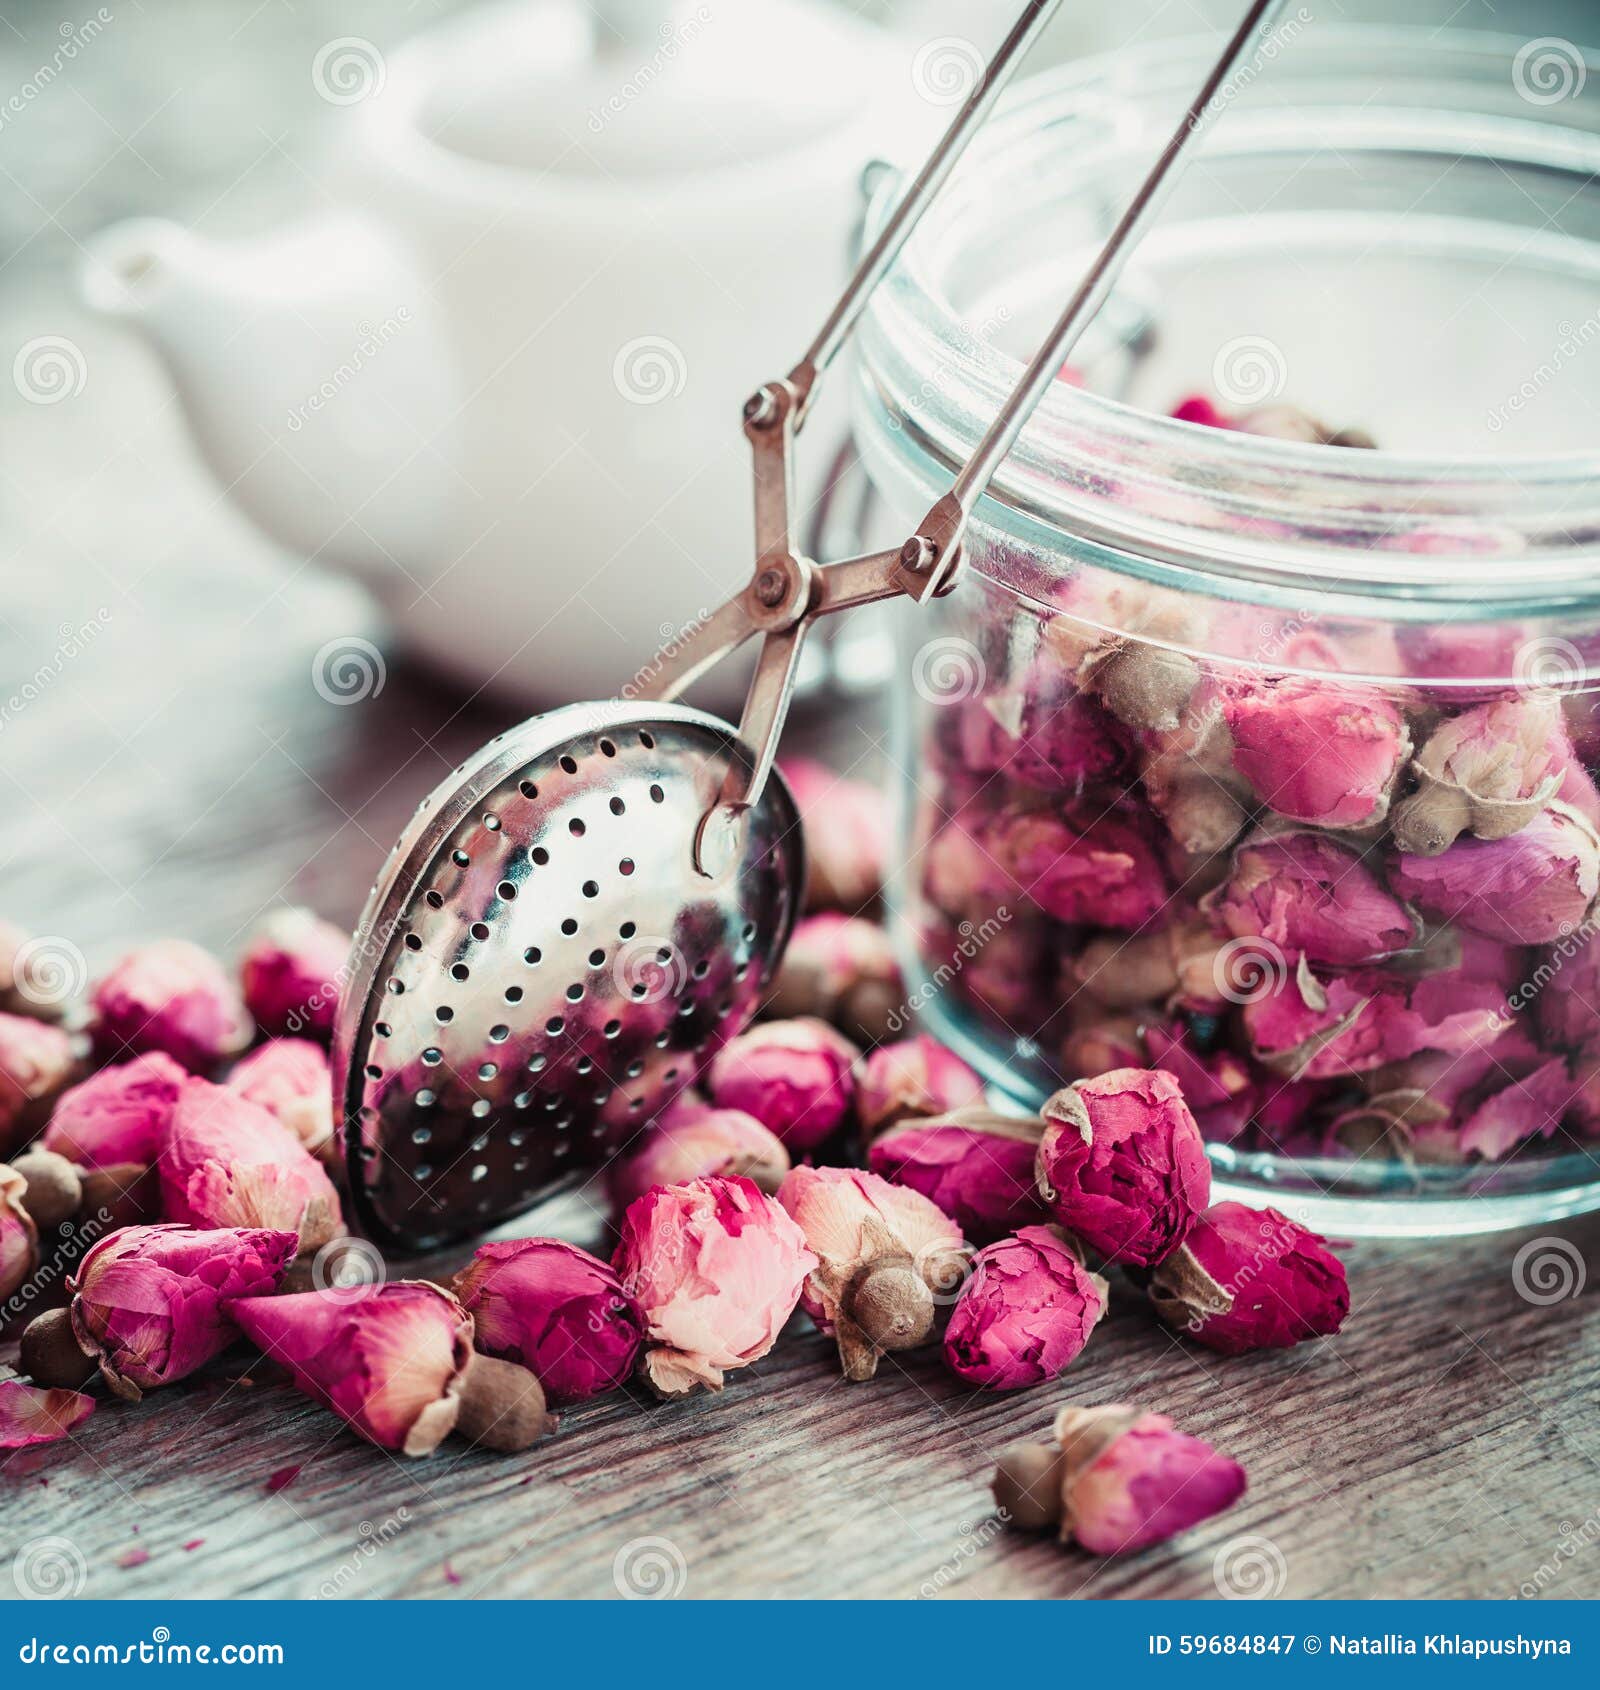 rose buds tea, tea infuser, glass jar and teapot on background.